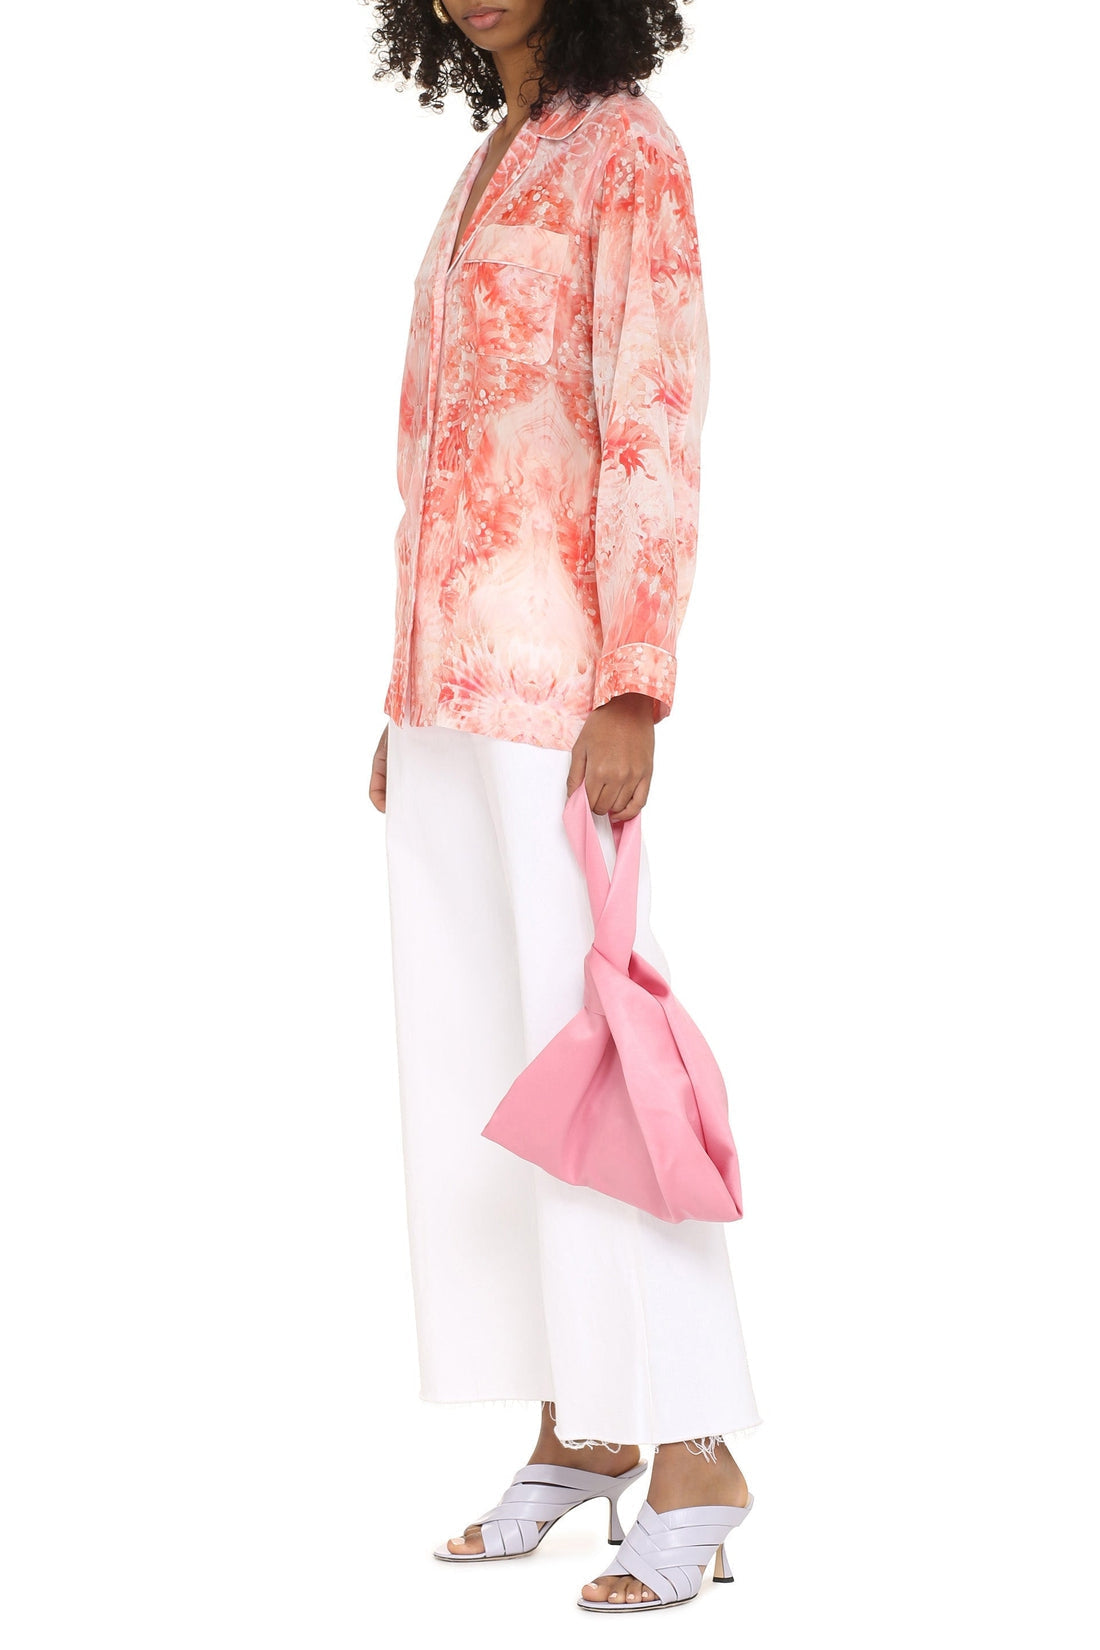 Alexander McQueen-OUTLET-SALE-Printed silk pajama blouse-ARCHIVIST